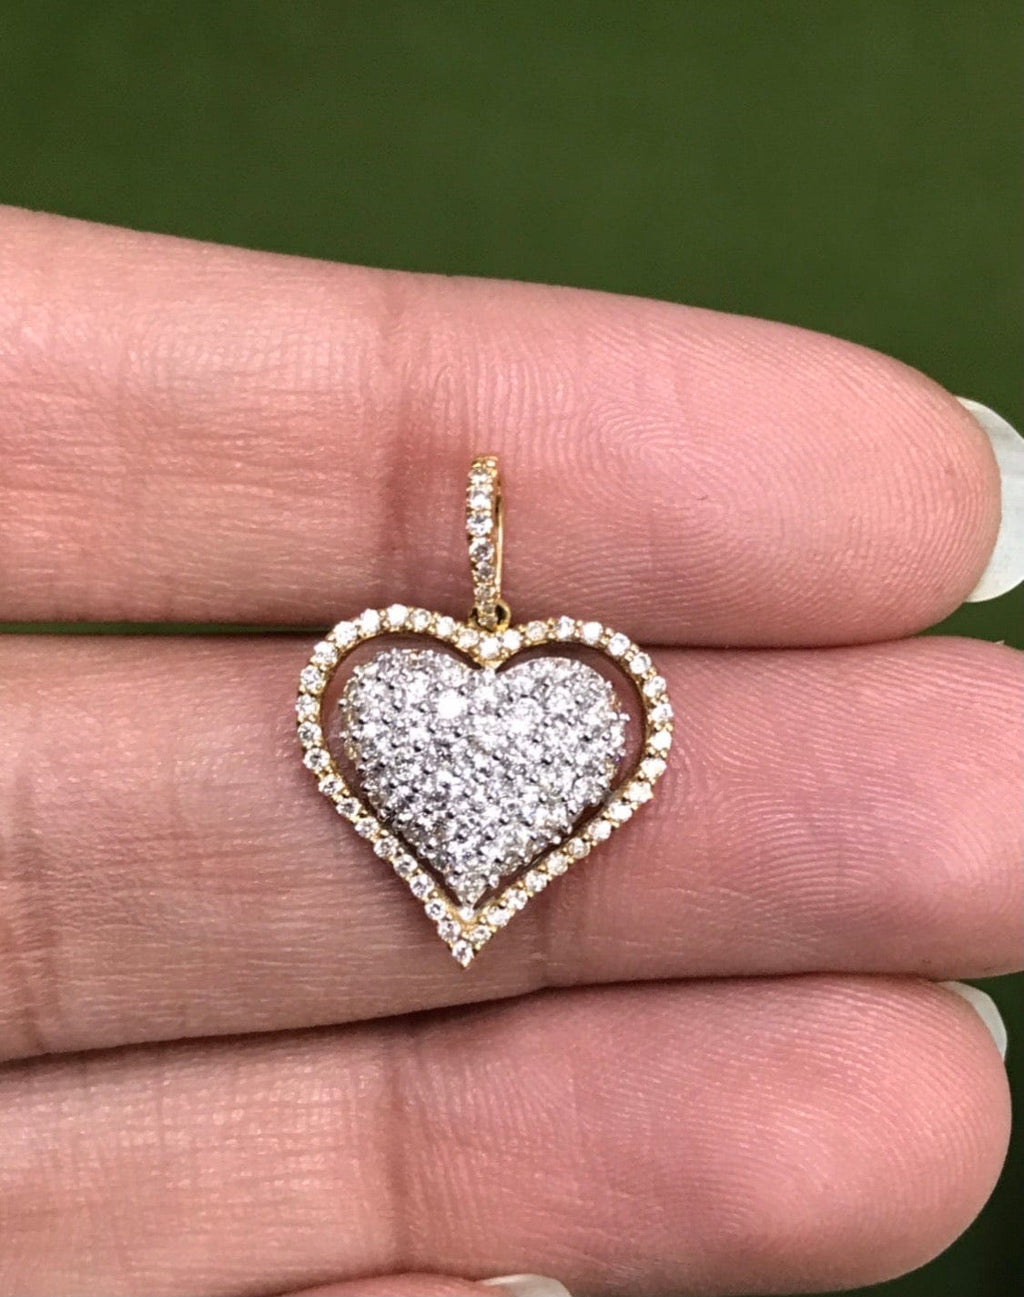 Jewelove™ Necklaces & Pendants Gold & Diamond Heart Pendant by Jewelove